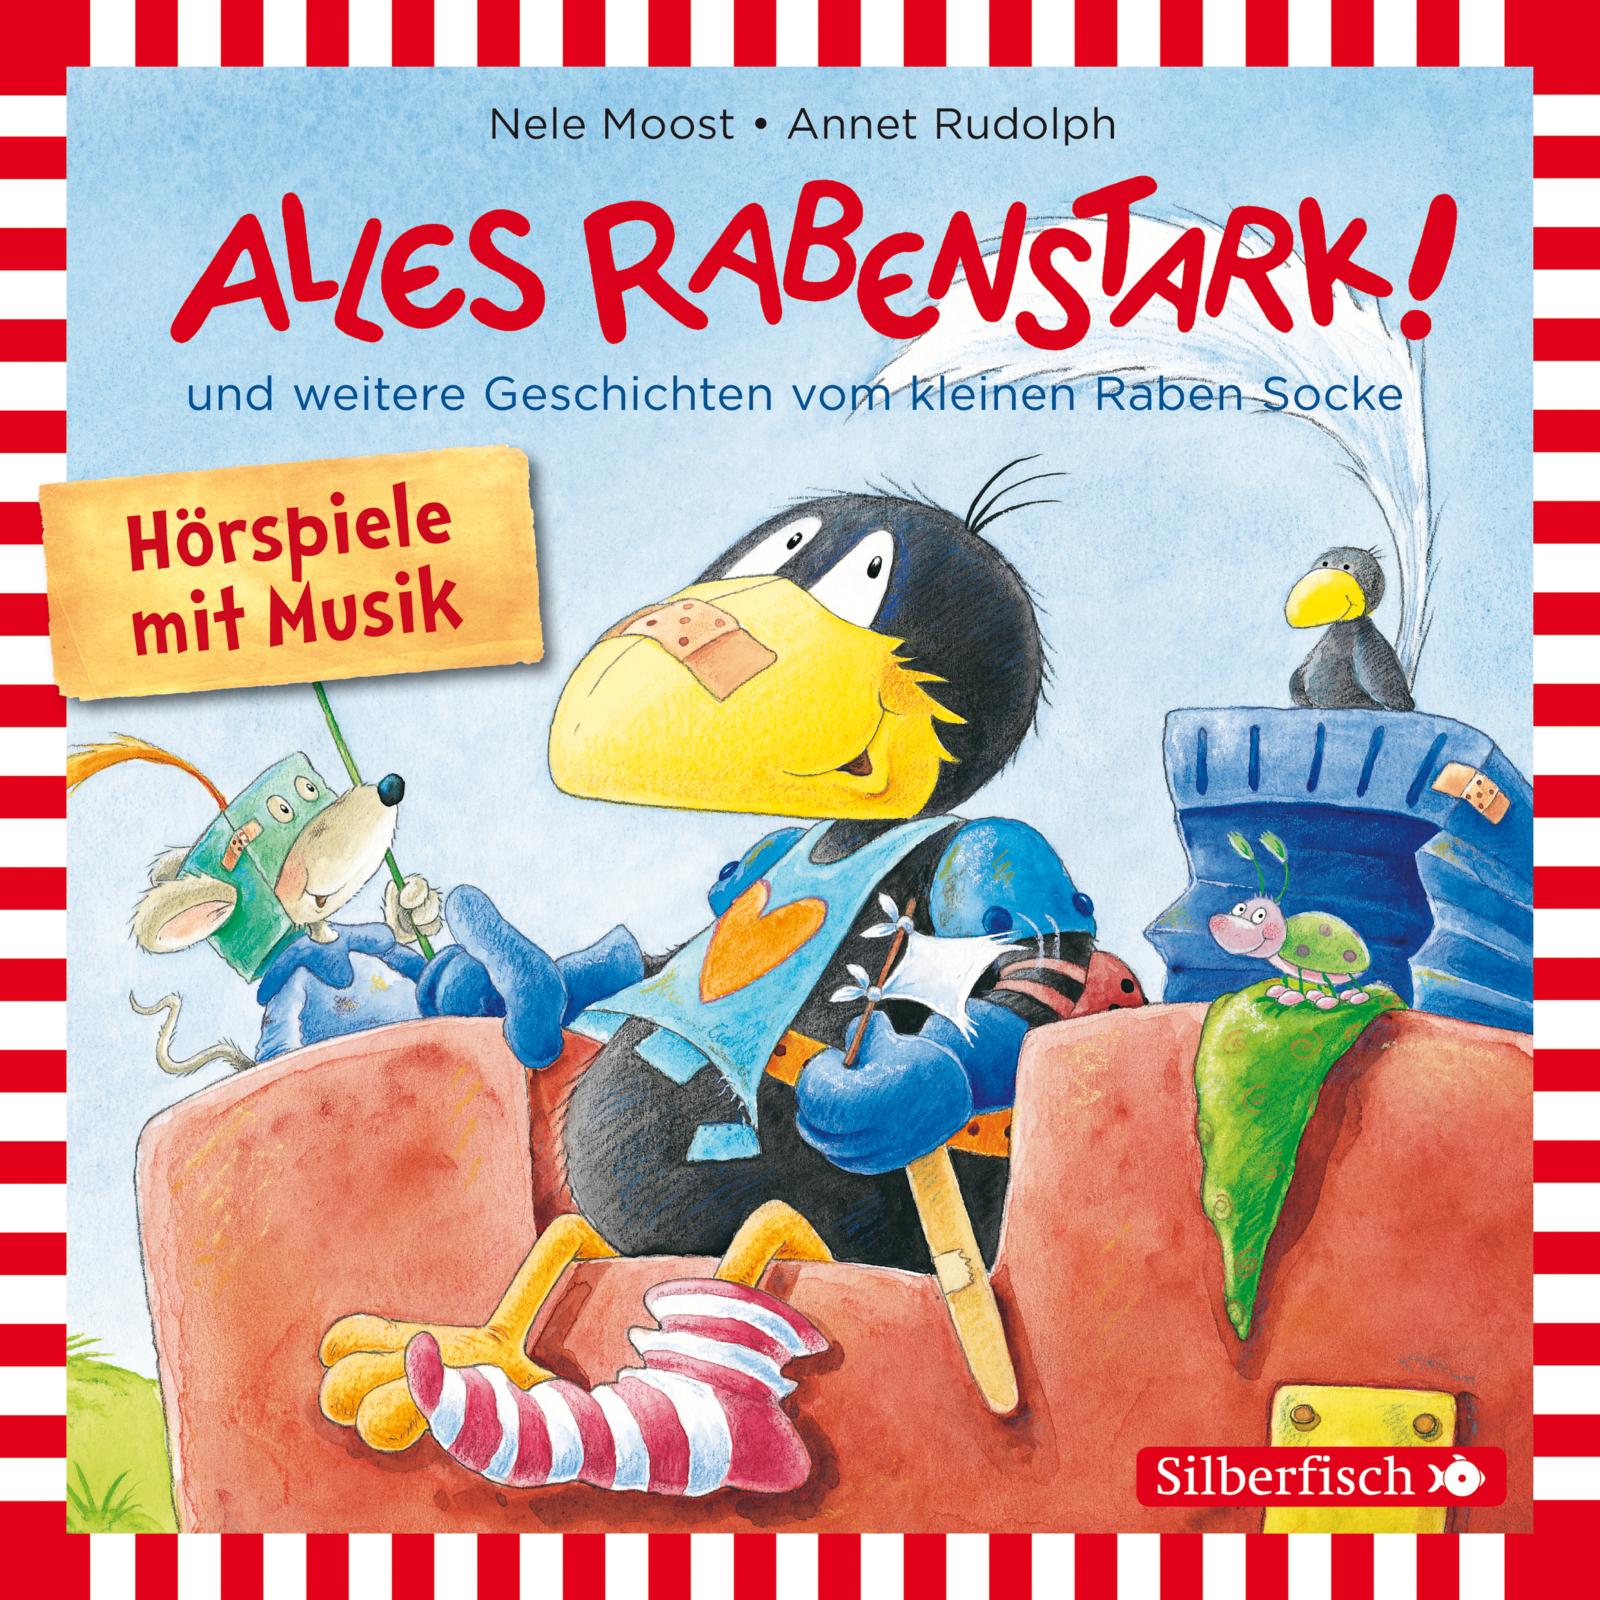 Alles rabenstark!, Alles aufgeräumt!, Alles kaputt! (Der kleine Rabe Socke)  | Hörbuch Hamburg Verlag